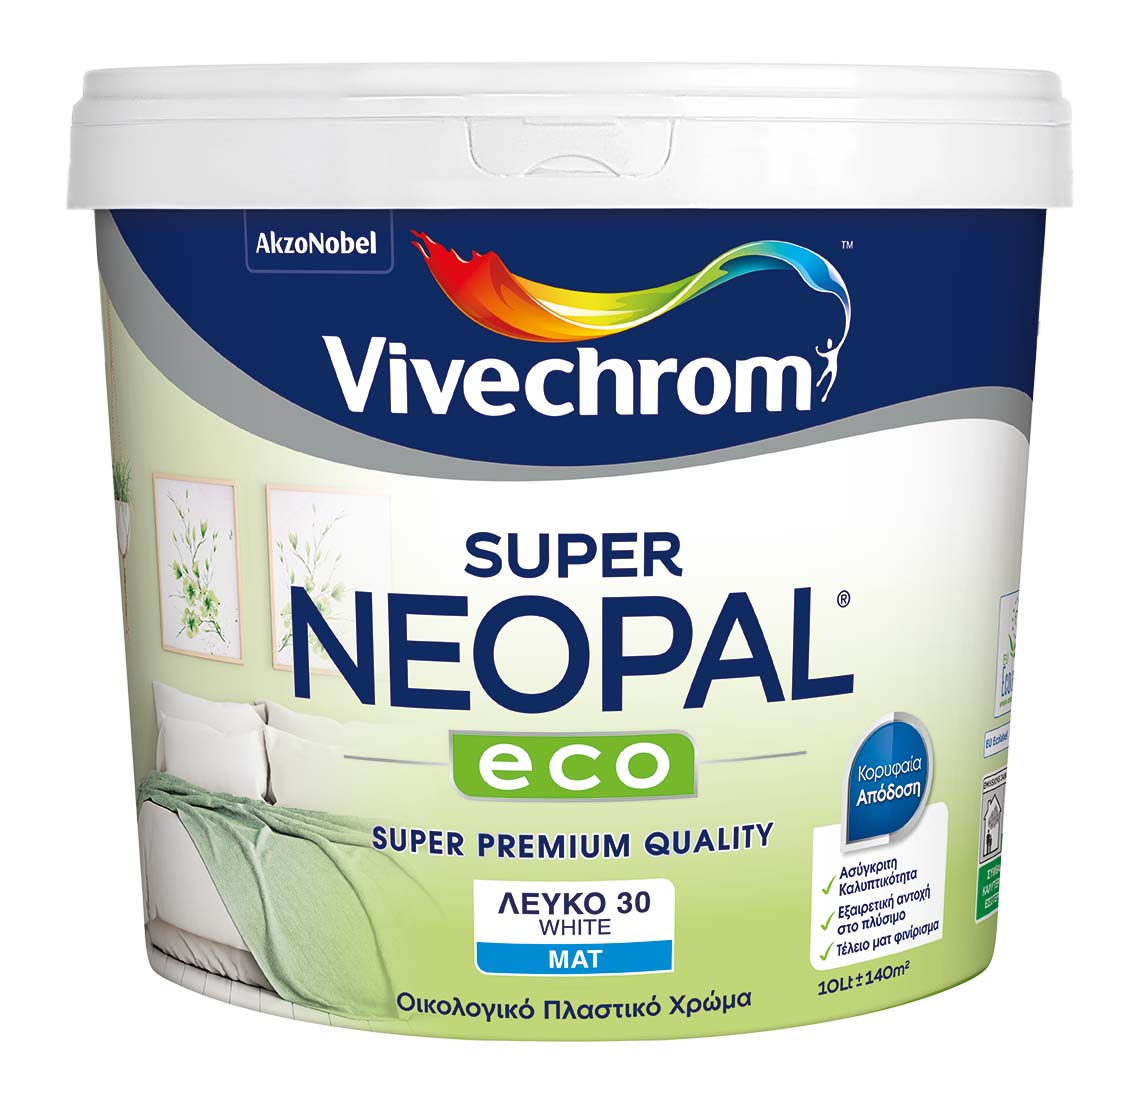 Vivechrom Super Neopal Eco White 10L